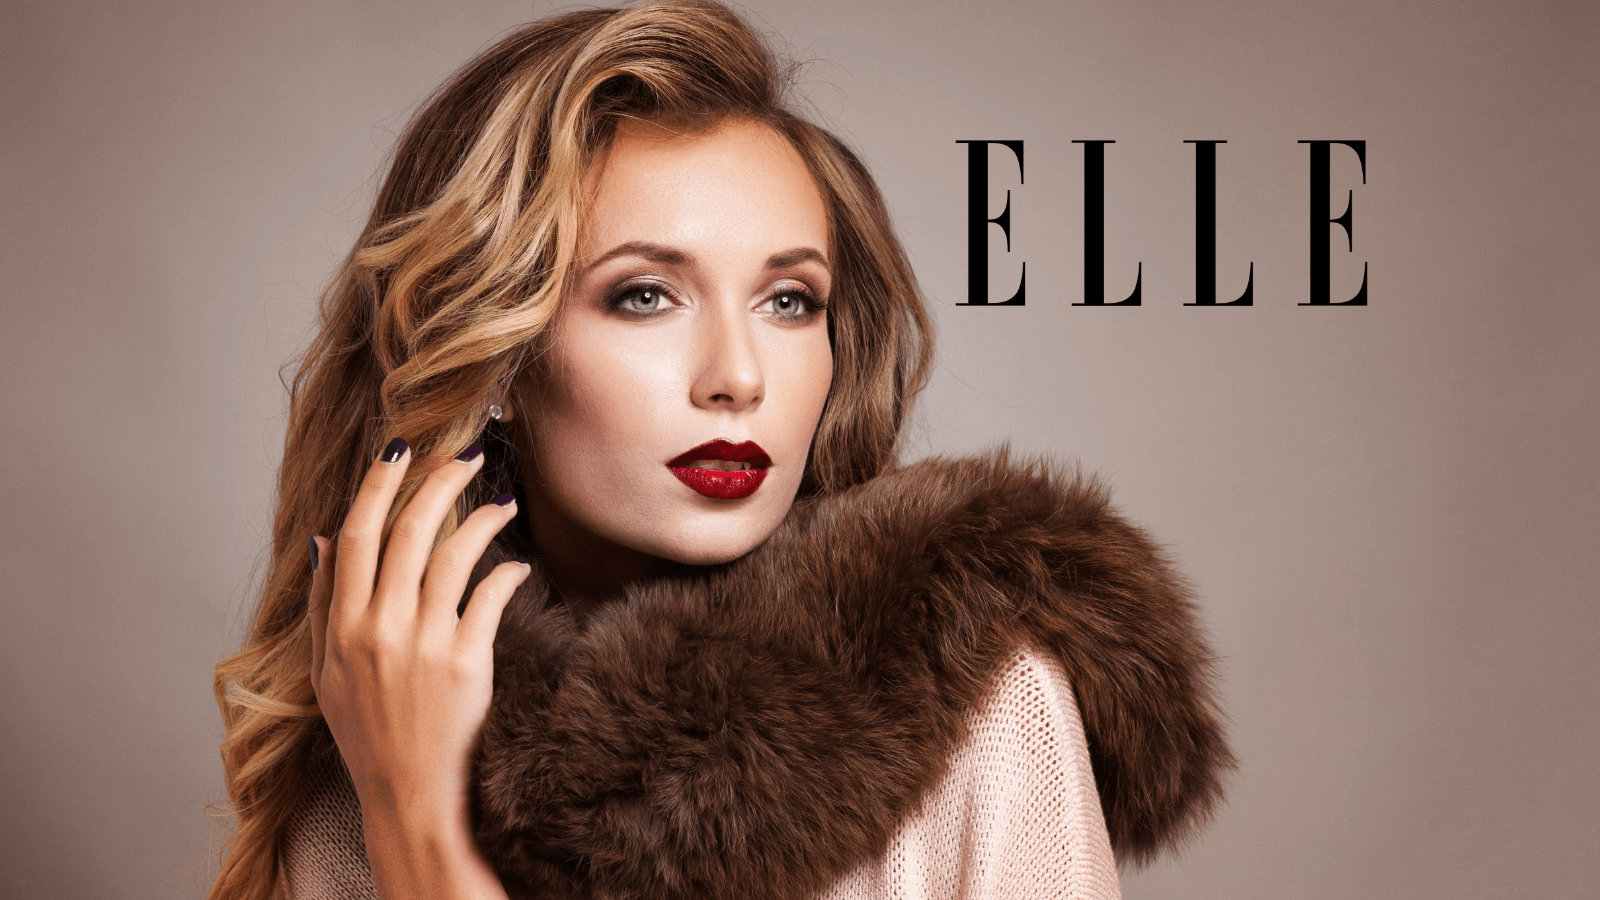 Top Fashion Magazine ELLE Pledges To Go Fur-Free In 'World First'